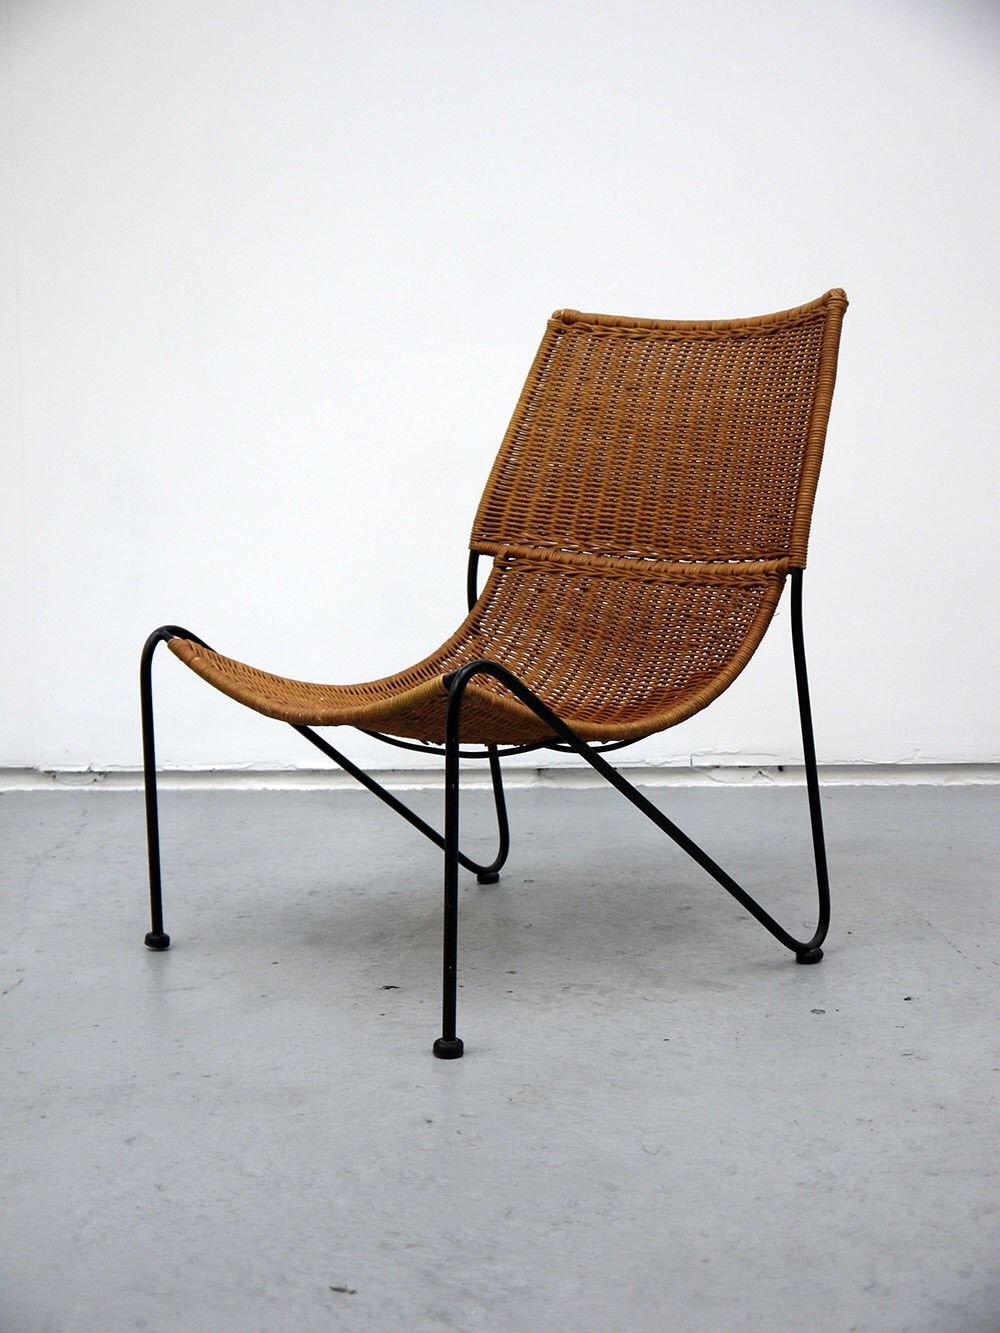 Rattan 50s Lounge Chair photo - 1